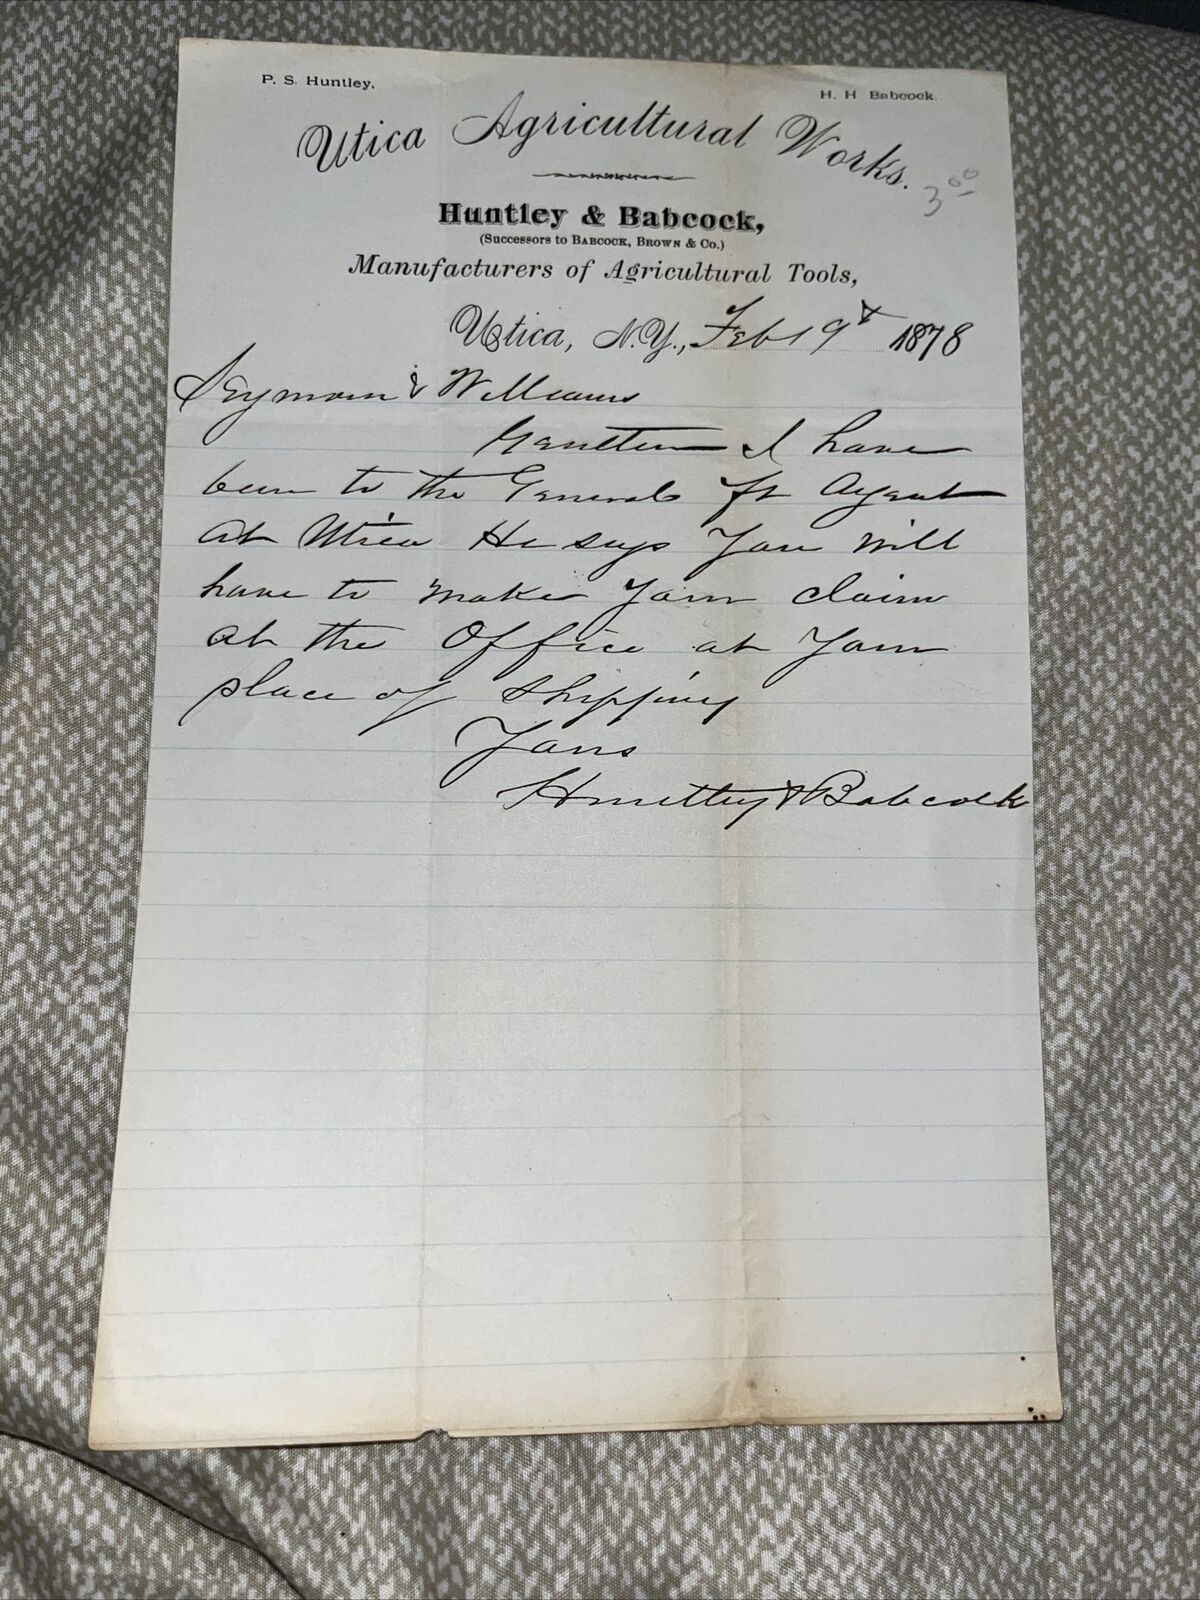 Antique 1878 Correspondence Utica Agricultural Works Letterhead Huntley Babcock